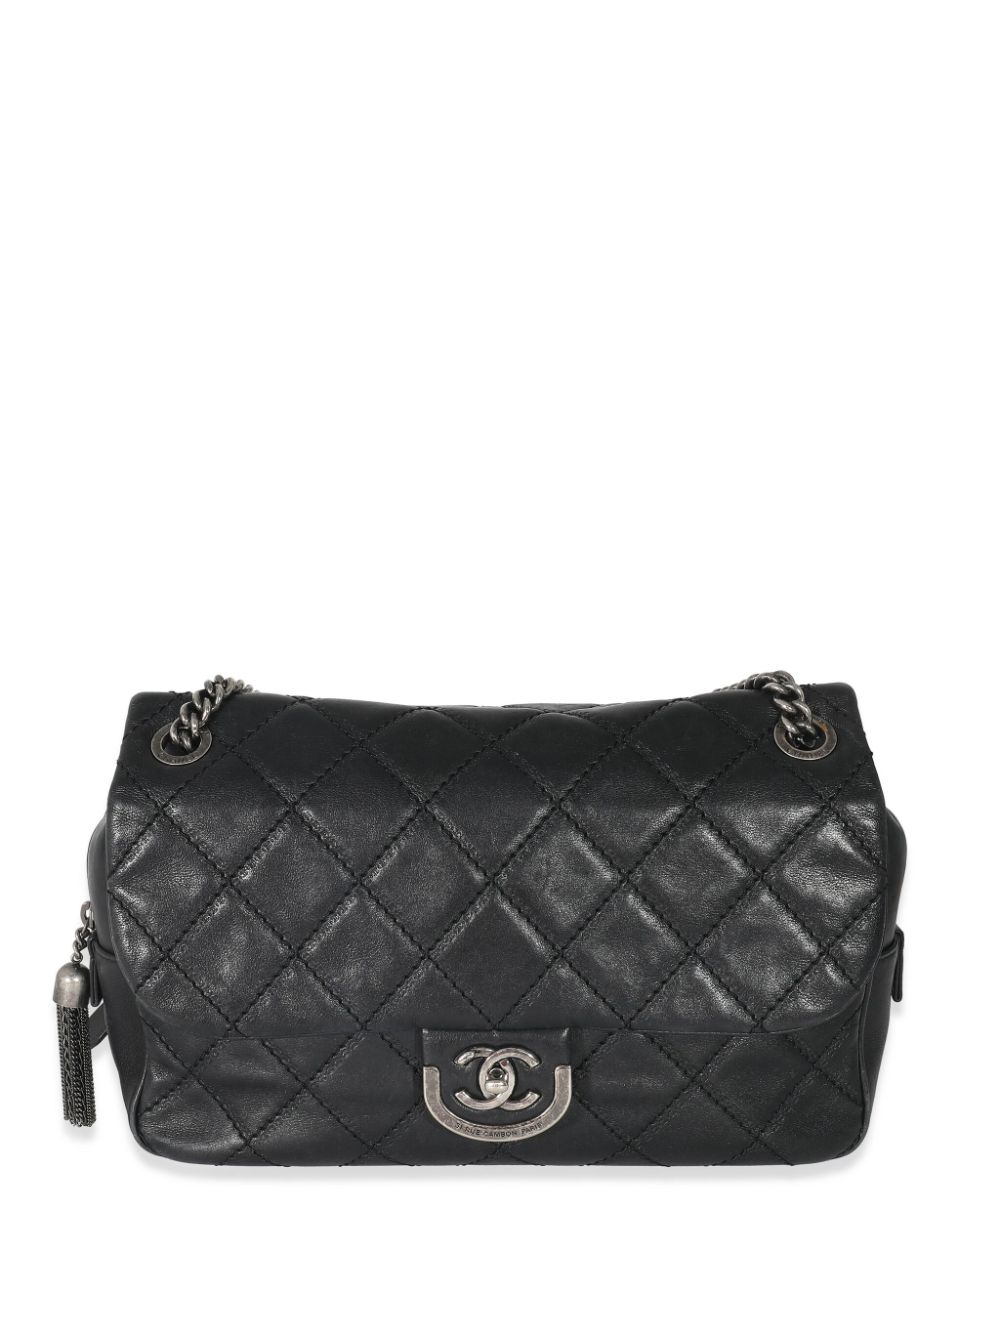 Pre-owned Chanel 2013 Paris-edinburgh Jumbo Flap Shoulder Bag In Black